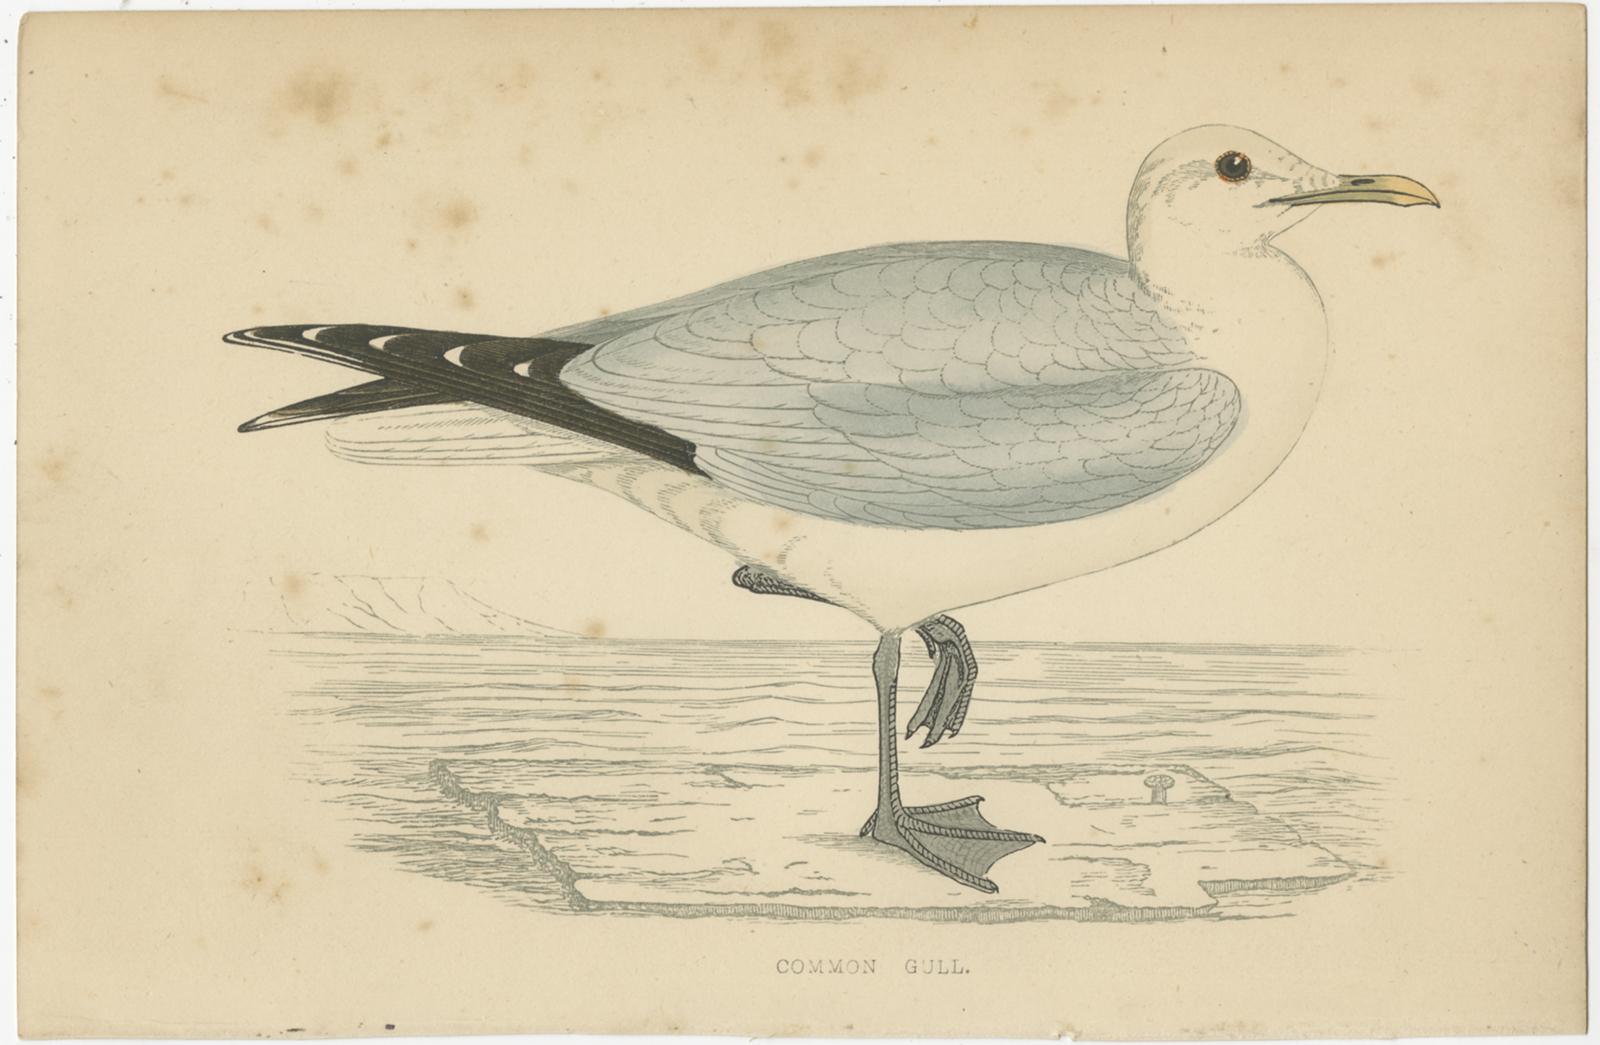 Paper Set of 10 Antique Bird Prints of various Sea Birds, circa 1867